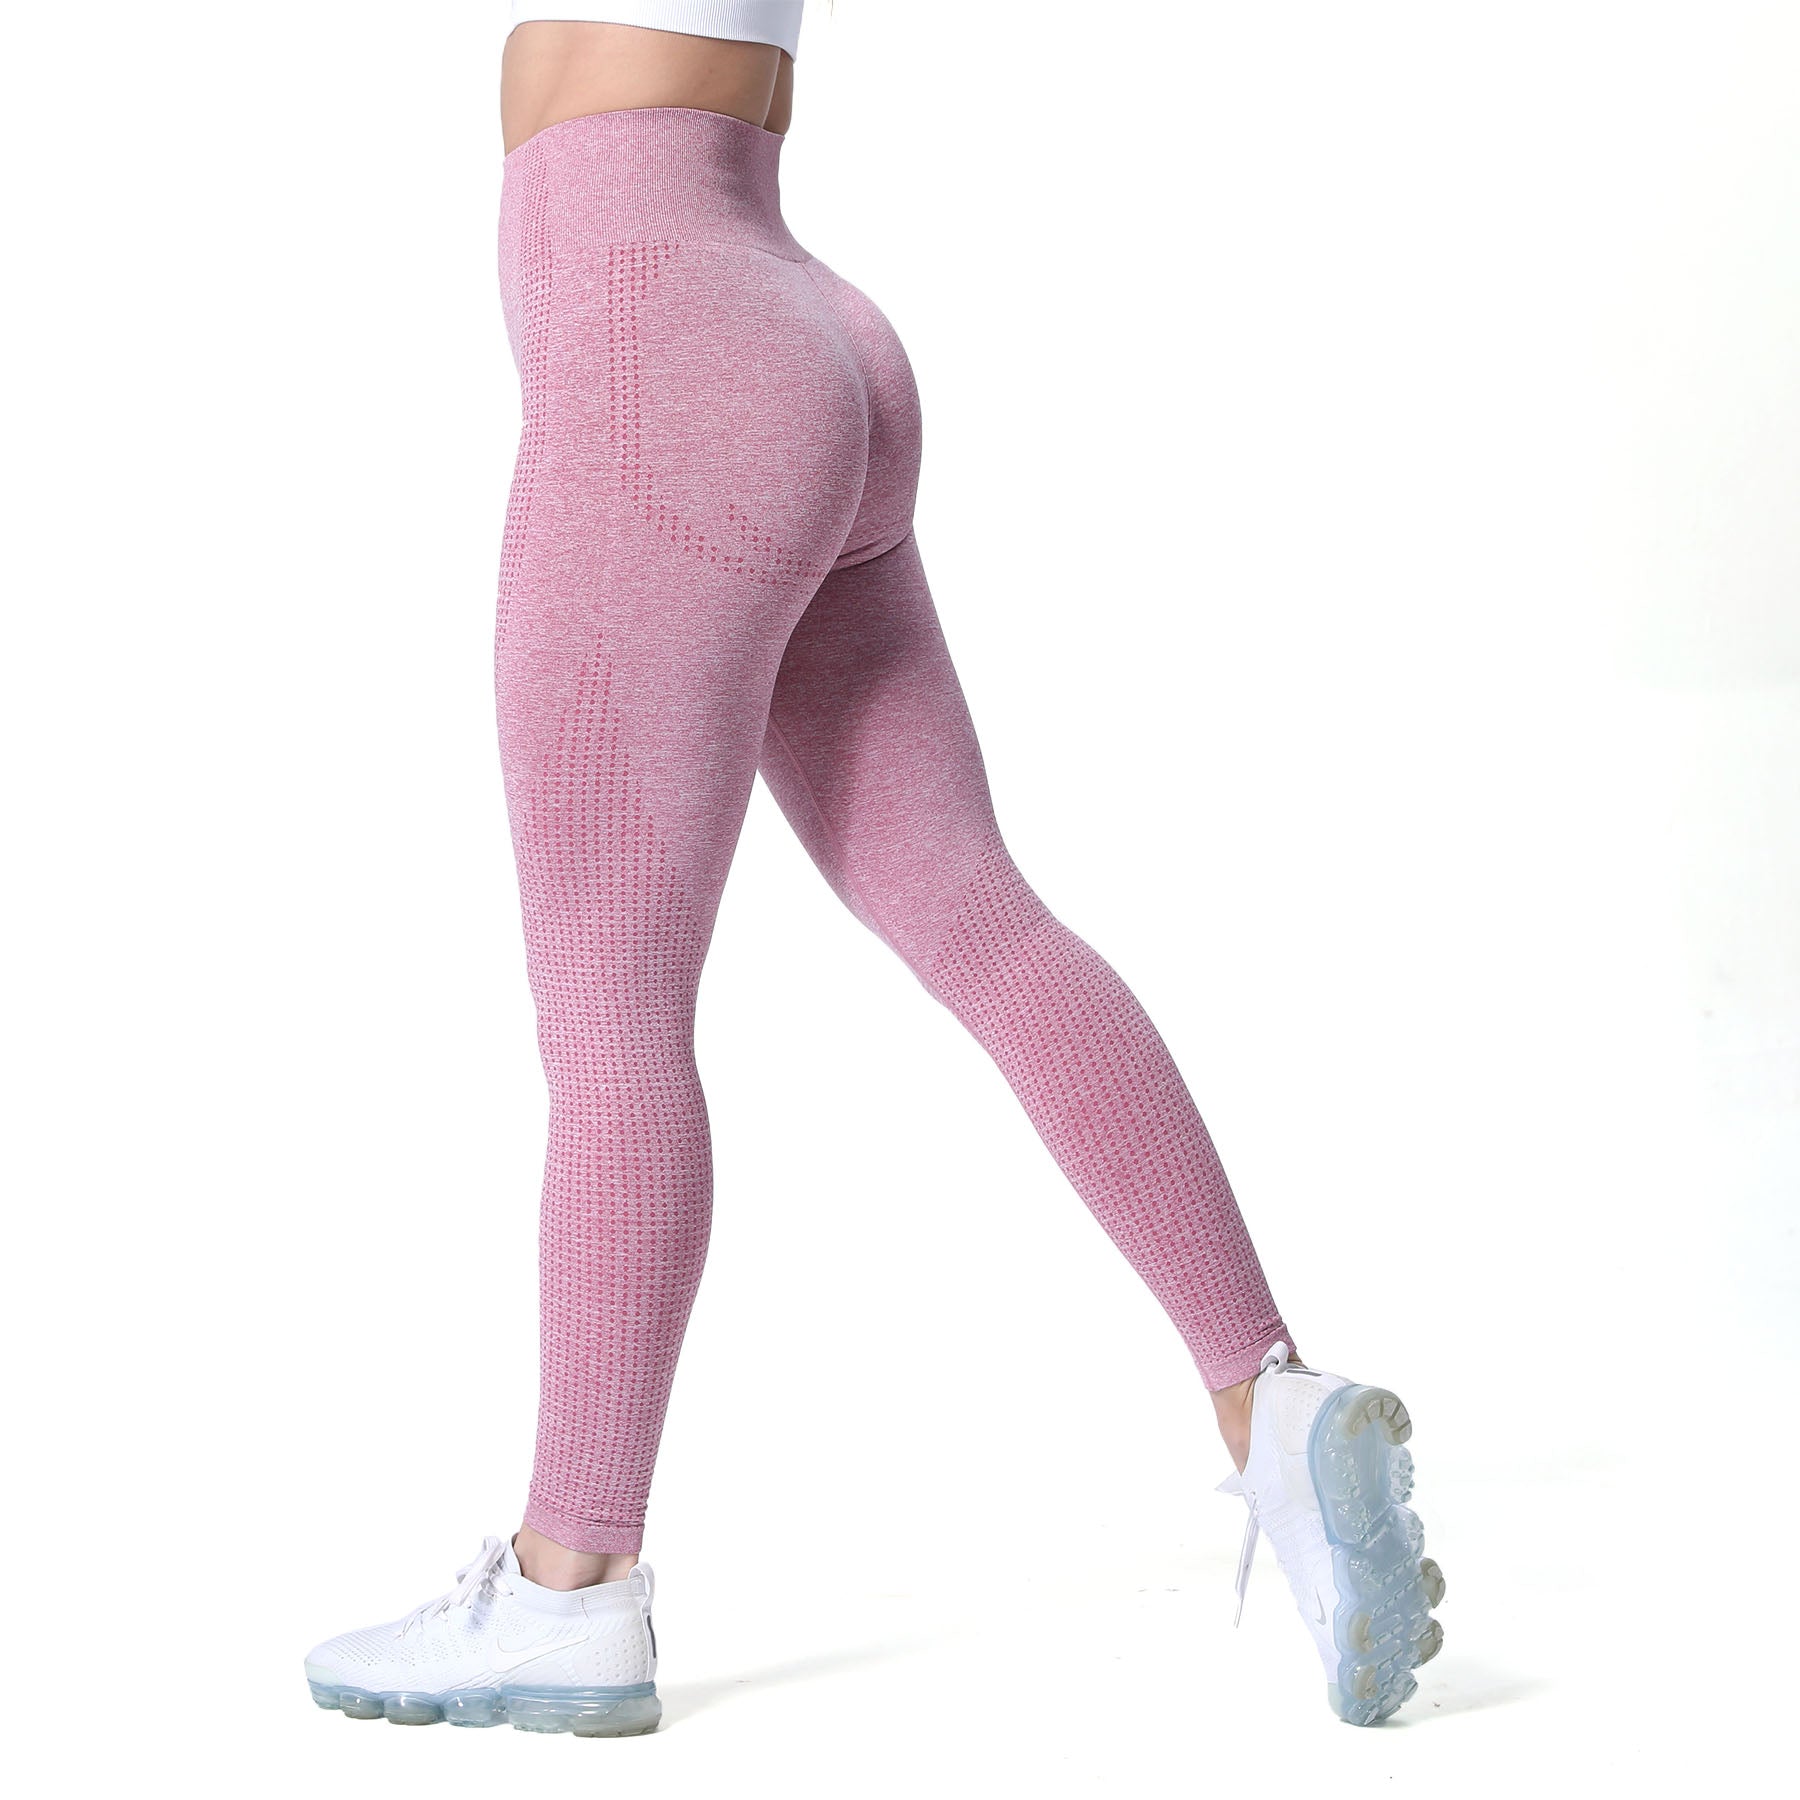 Aoxjox Womens Vital Seamless Leggings Yoga Pants Gym Workout Leggings